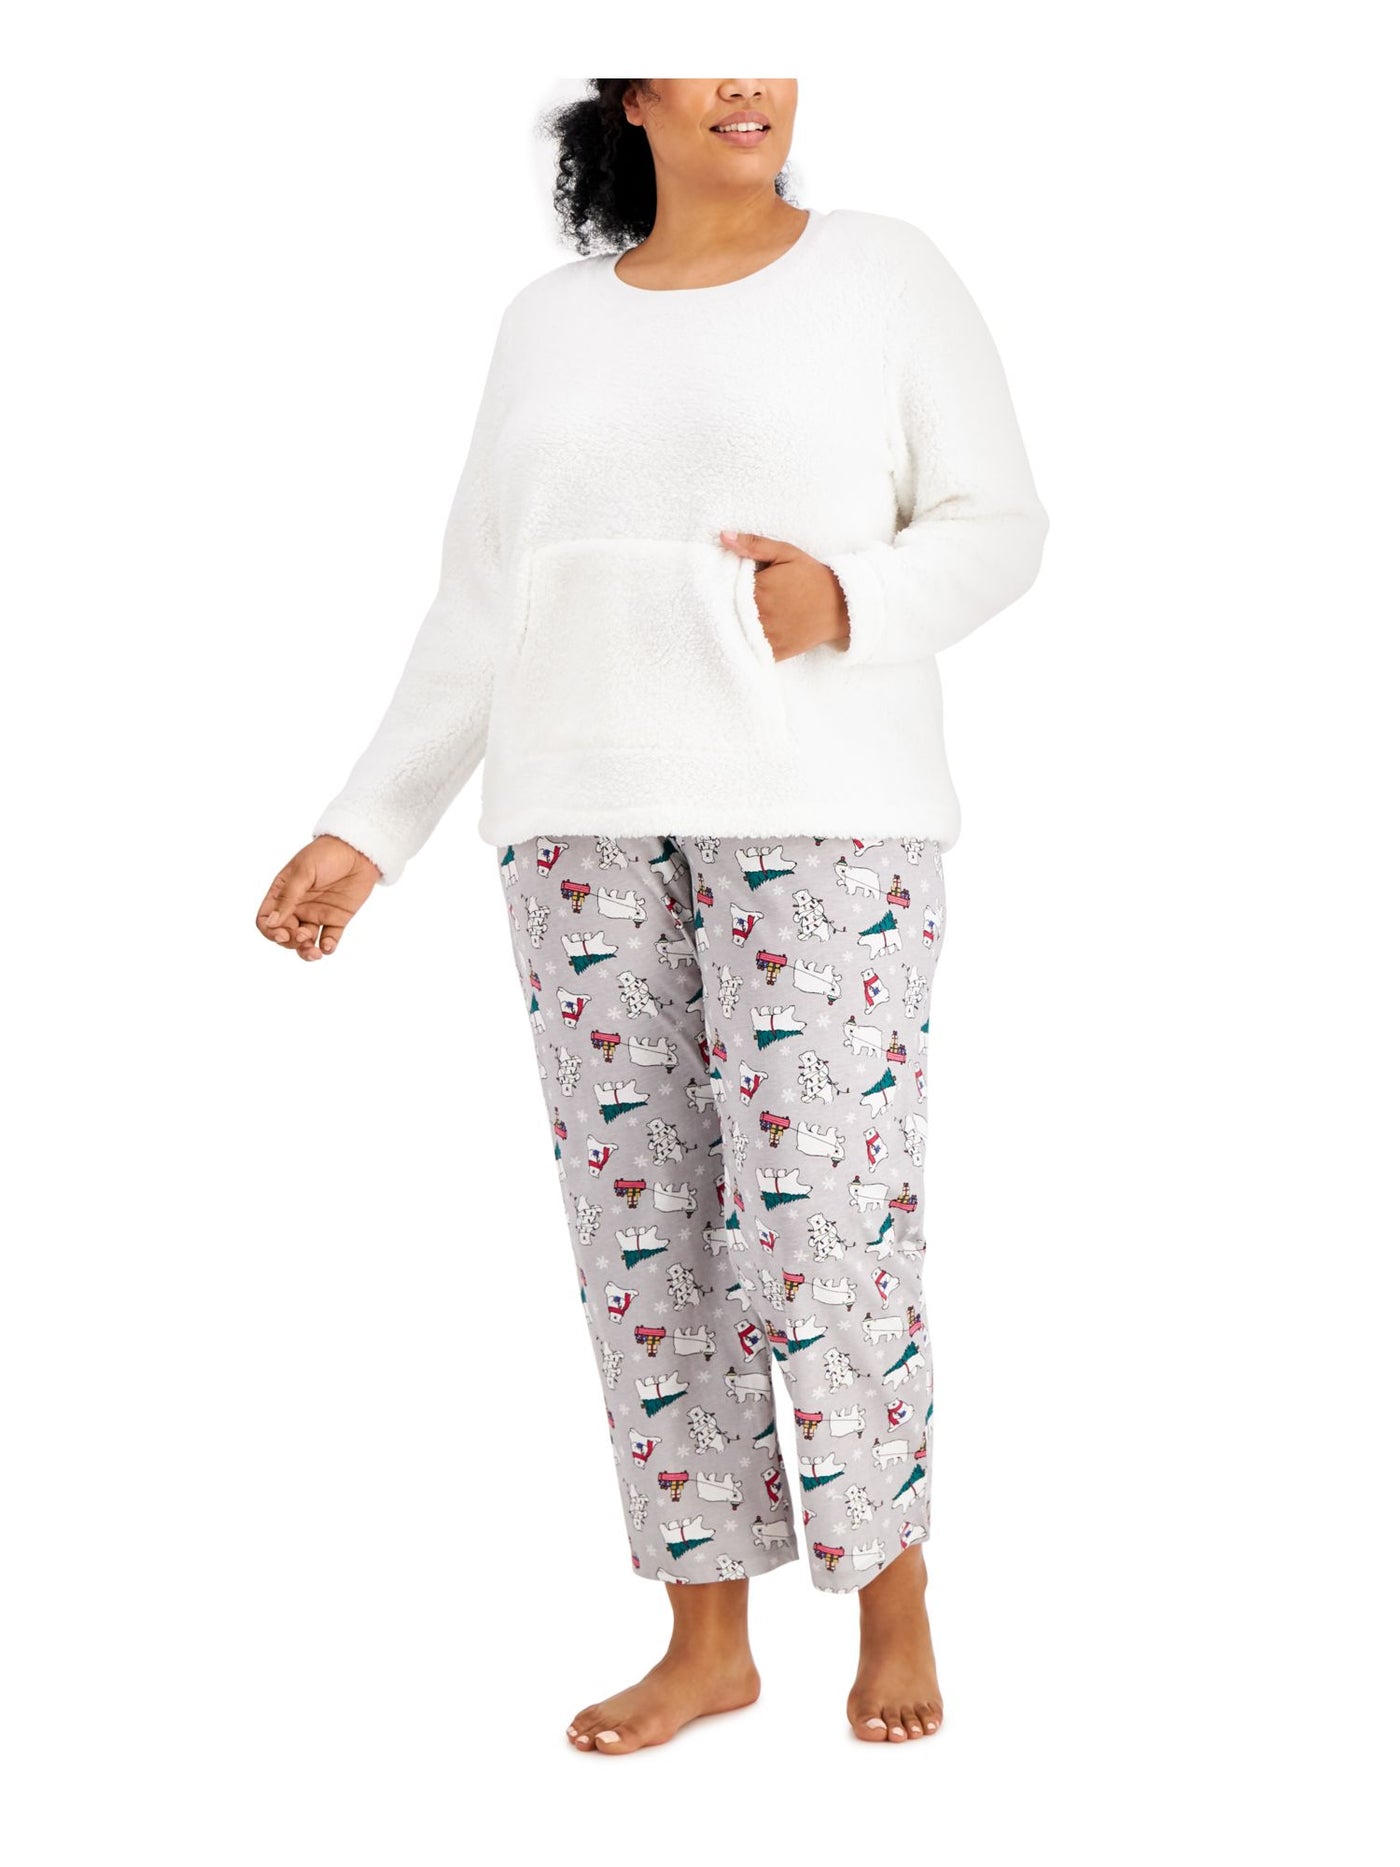 FAMILY PJs Womens White Top Ultra Soft Long Sleeve Straight leg Pants Pajamas Plus 1X